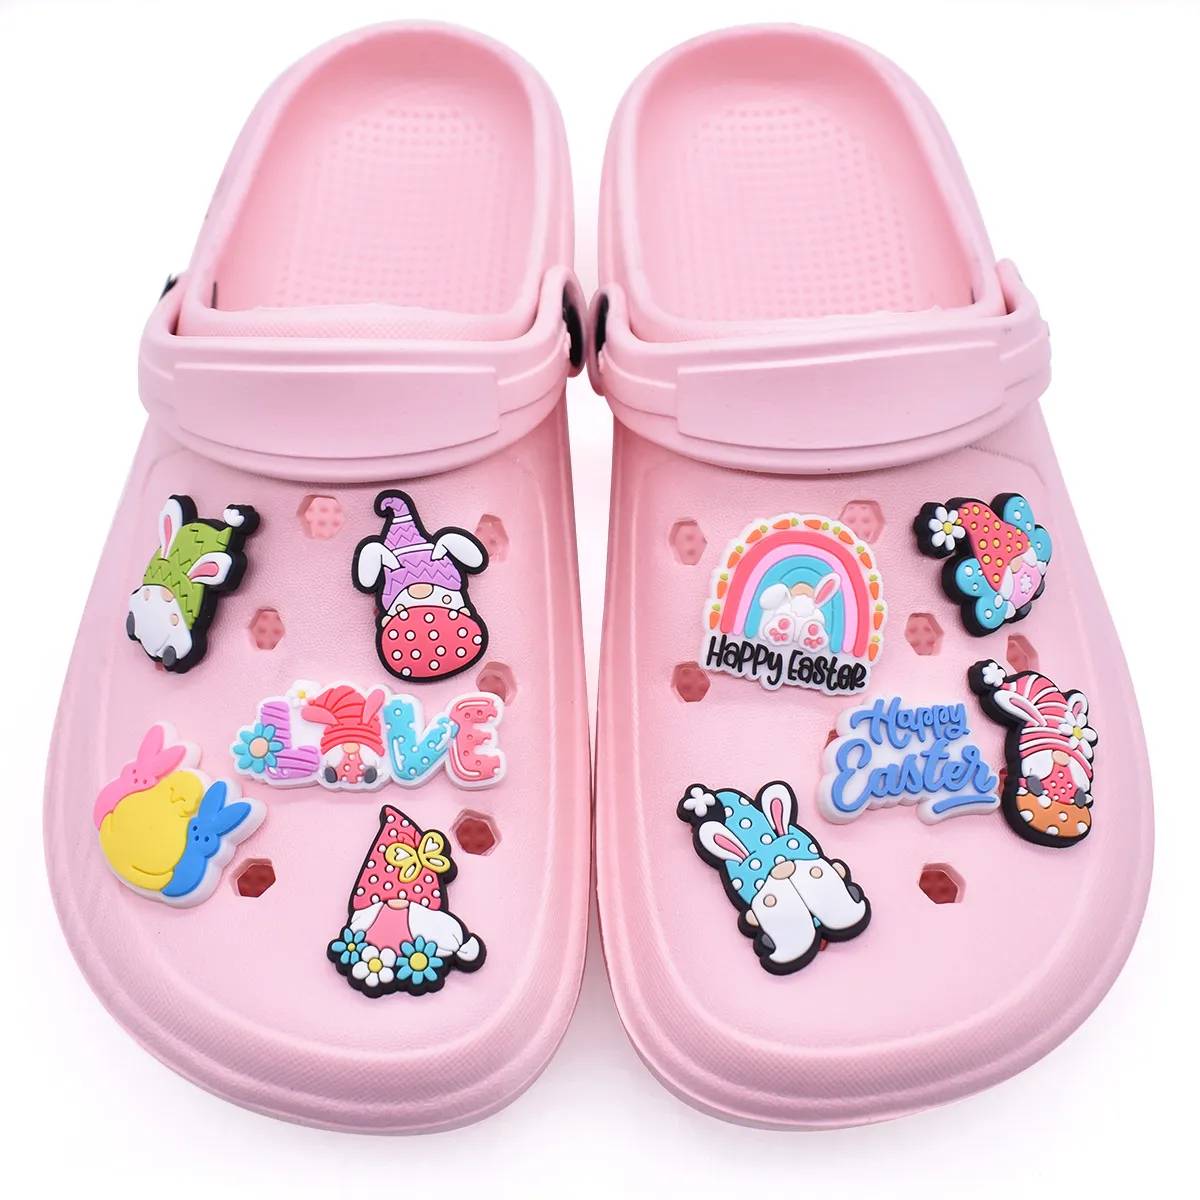 Shoe Parts Accessories Cute Charms Pvc Cartoon Decoration For Diy Clog Sandals Bracelets Kid Girls Boy Teen Party Favor Gift Series Ot9Re